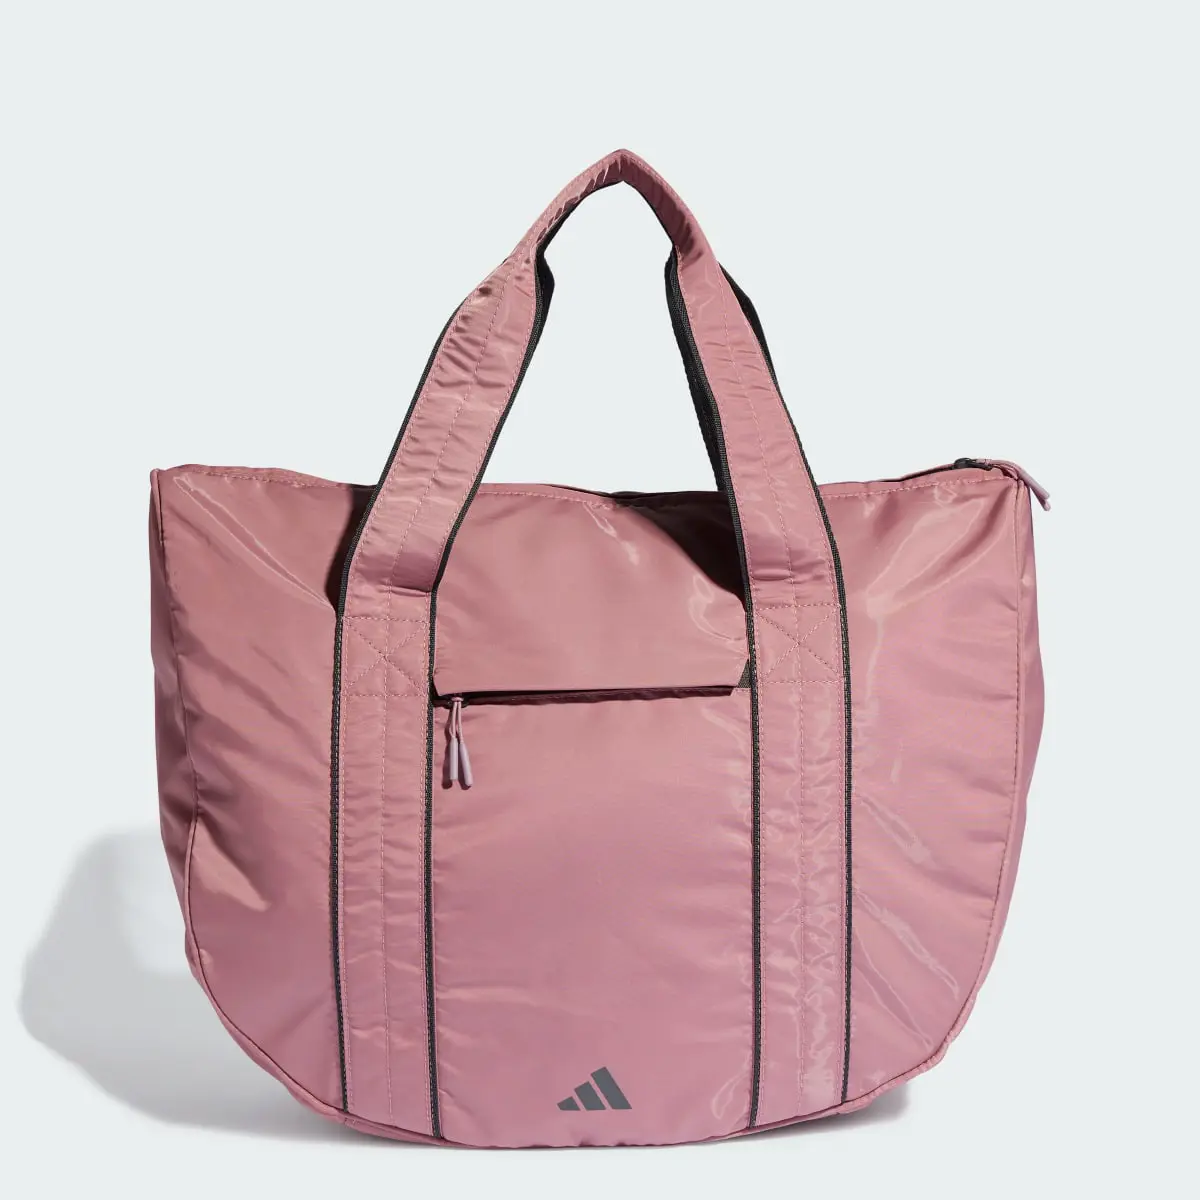 Adidas Yoga Tote Bag. 1